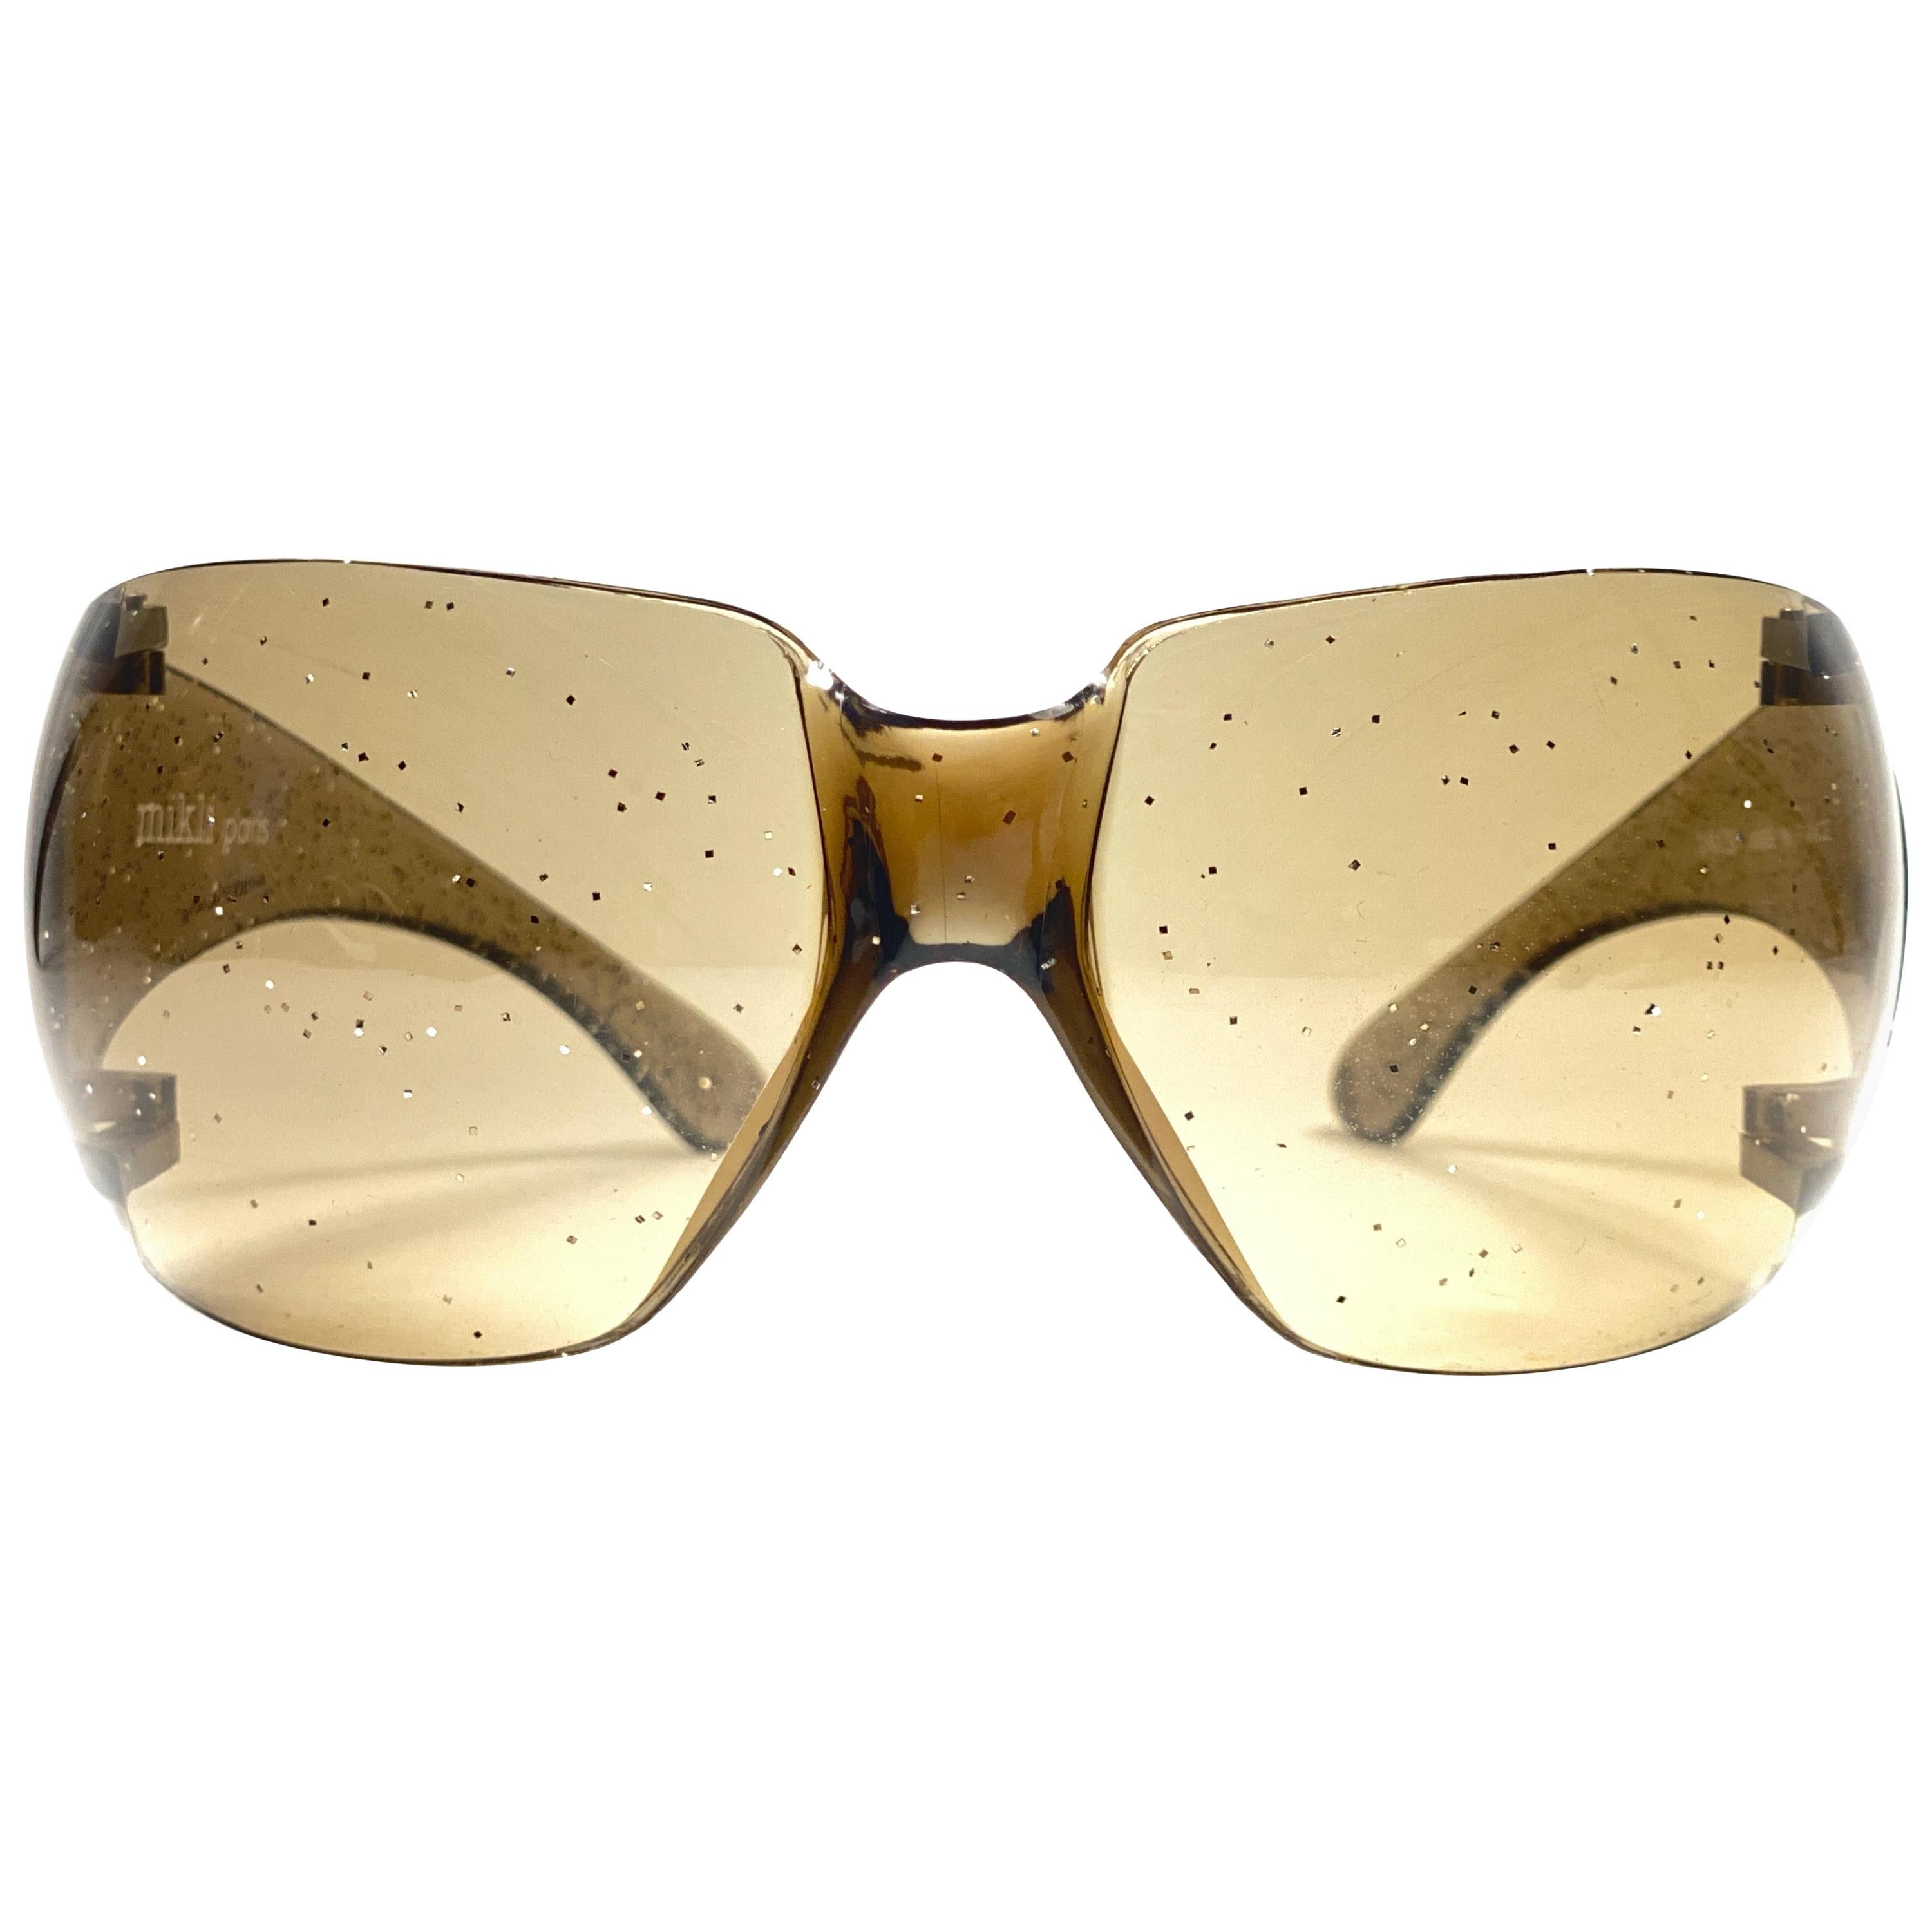 New Vintage Rare Alain Mikli Bubble Mask Made in France Sunglasses 1988